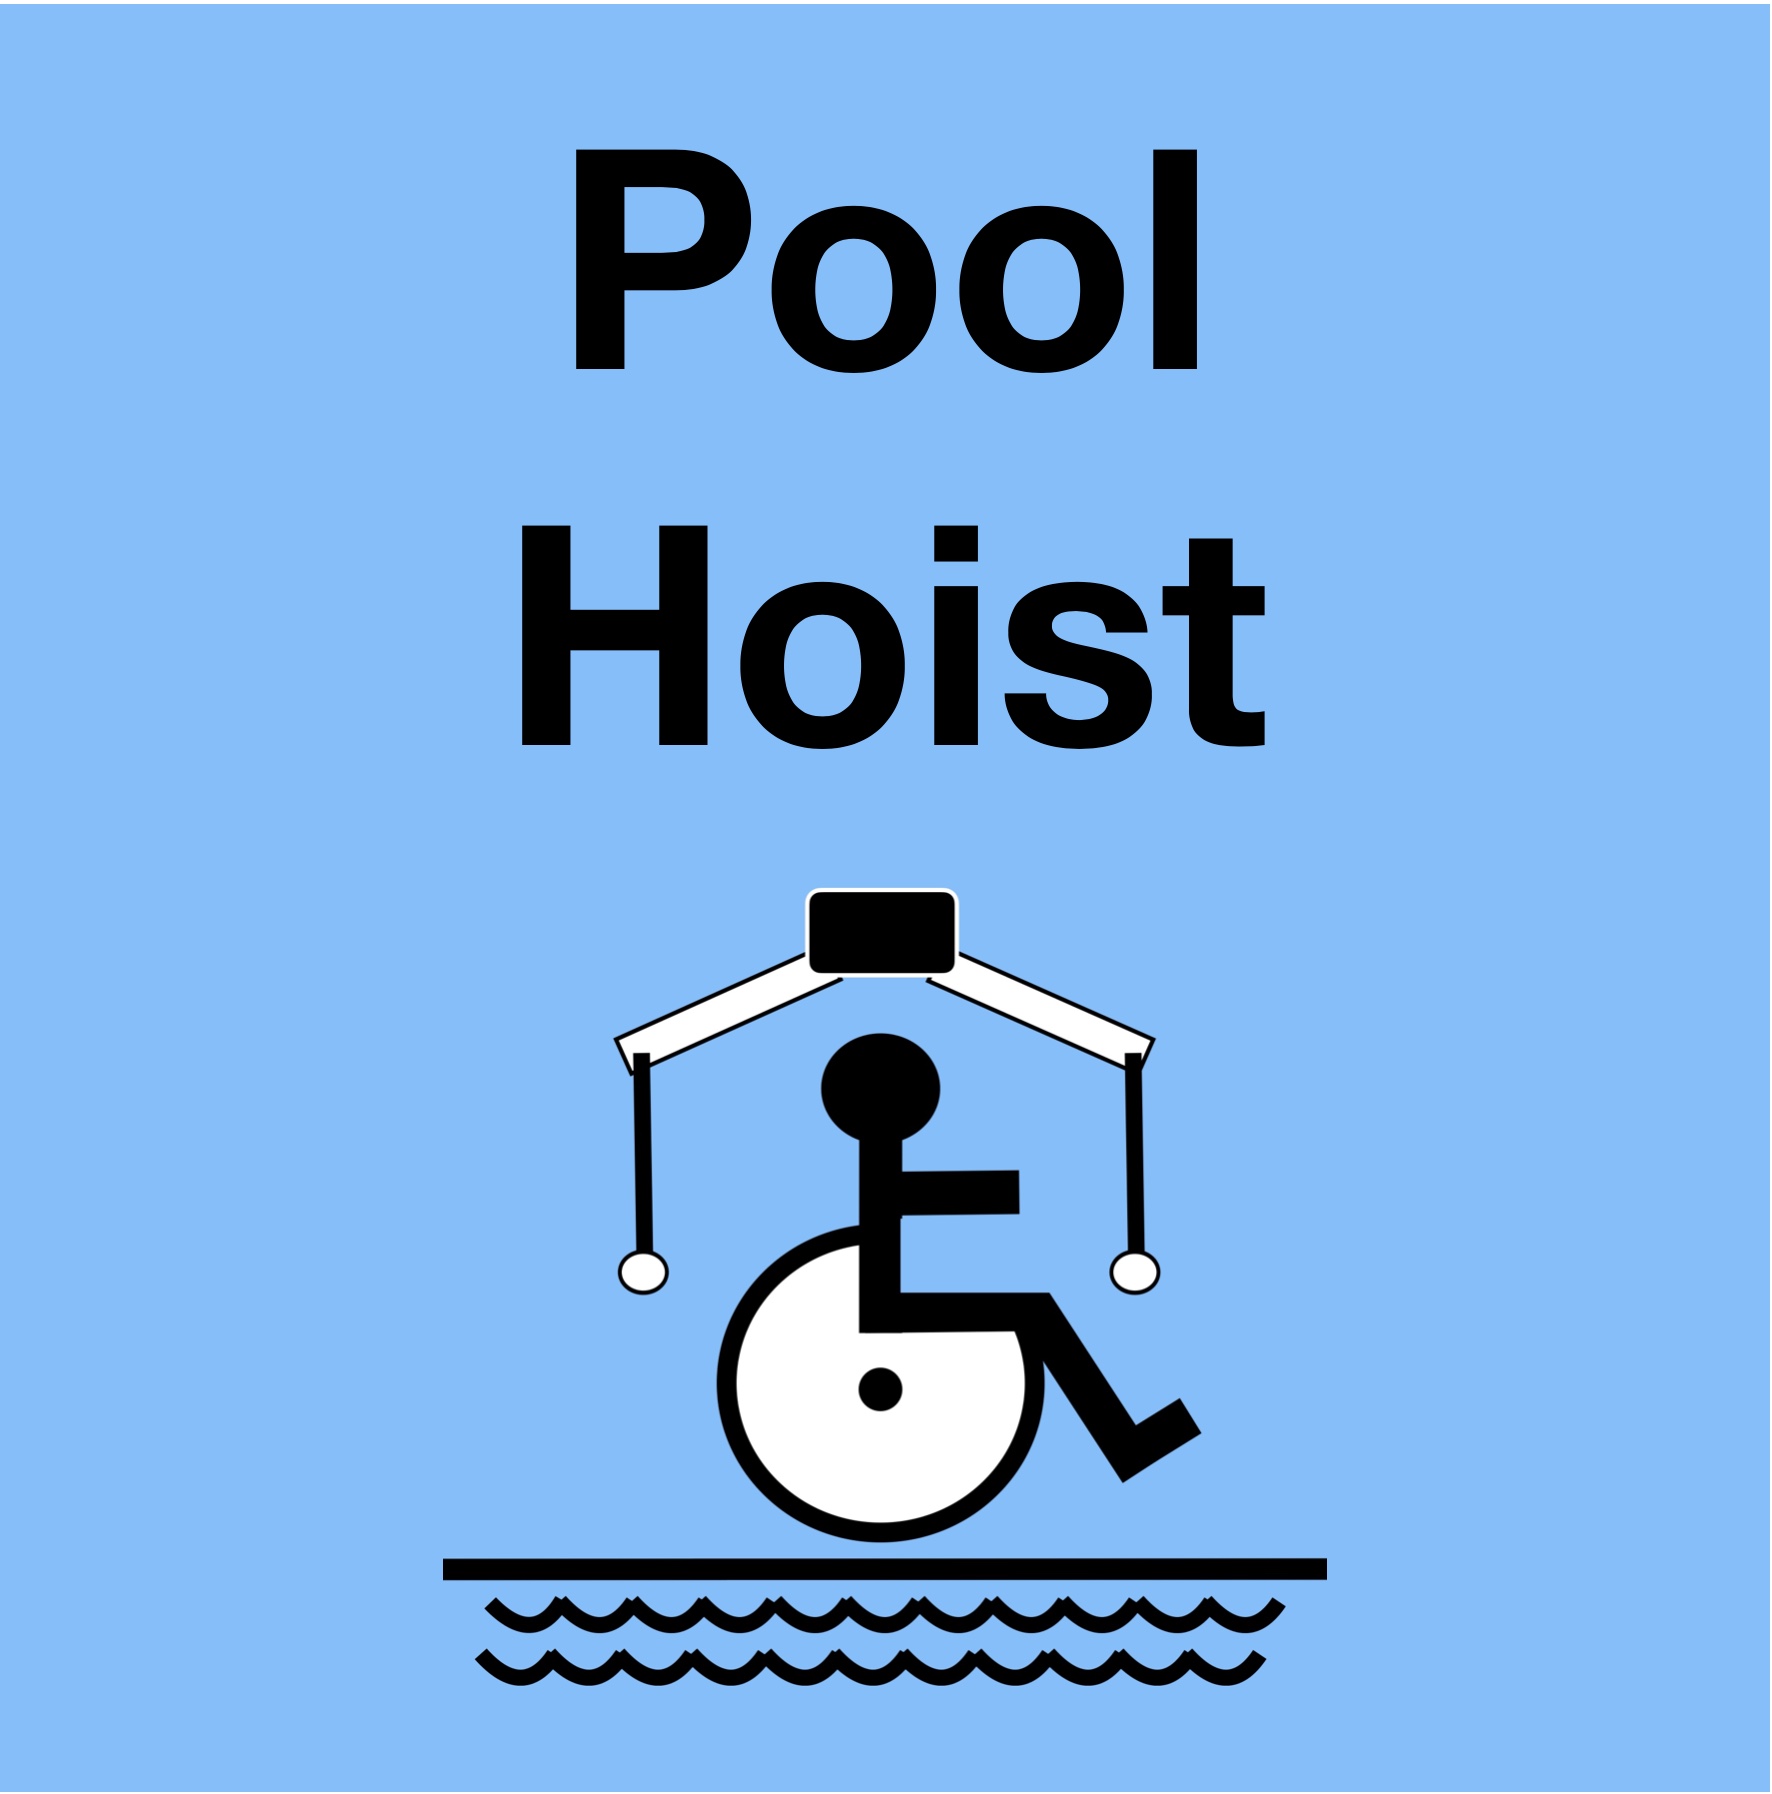 Swimming Pool Hoist In Hotel